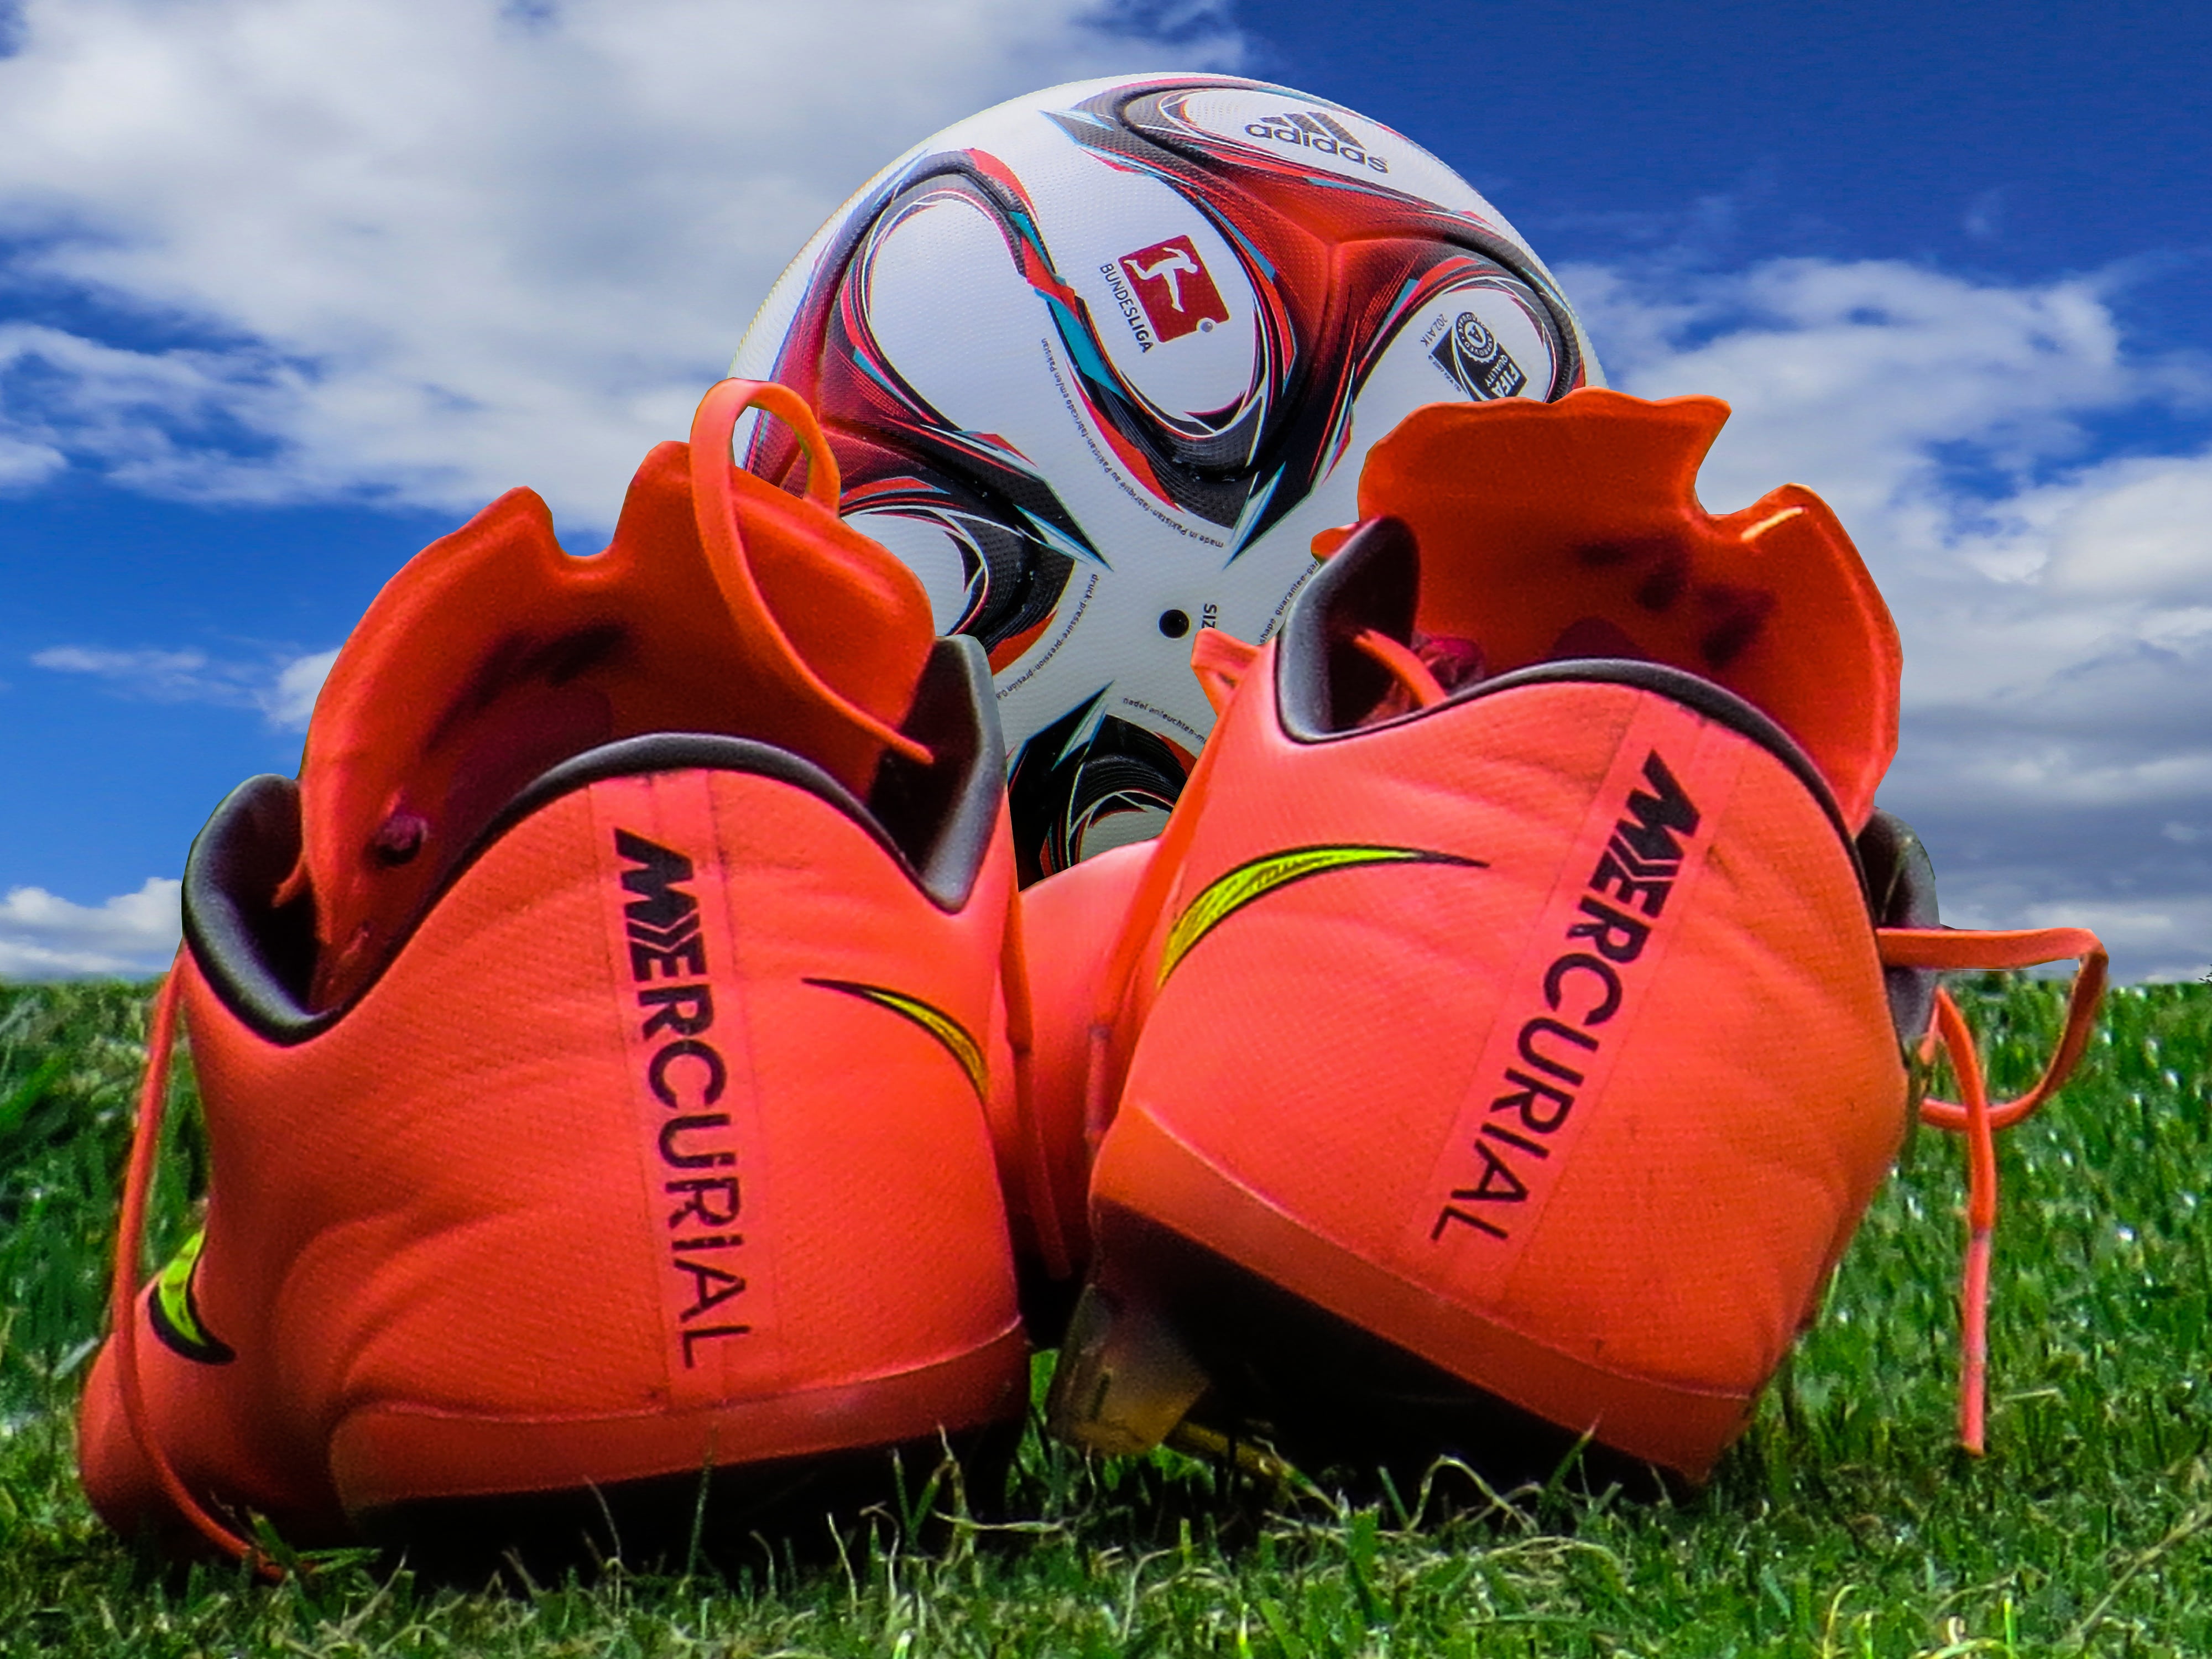 pair of orange Mercury cleats, football, shoe, sport, outdoors